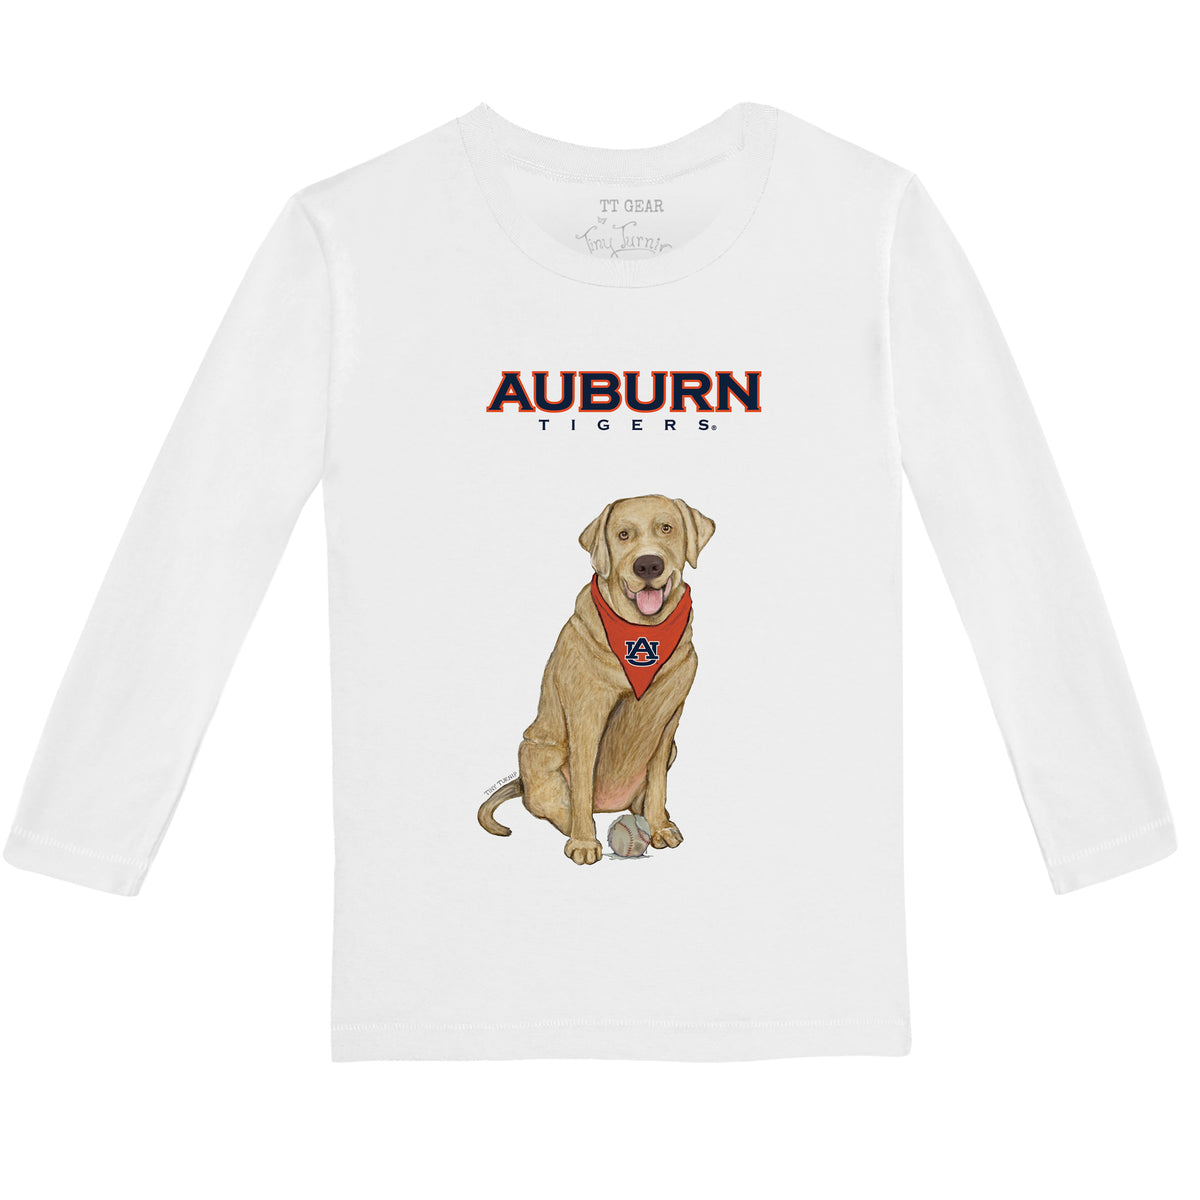 Auburn Tigers Yellow Labrador Retriever Long-Sleeve Tee Shirt